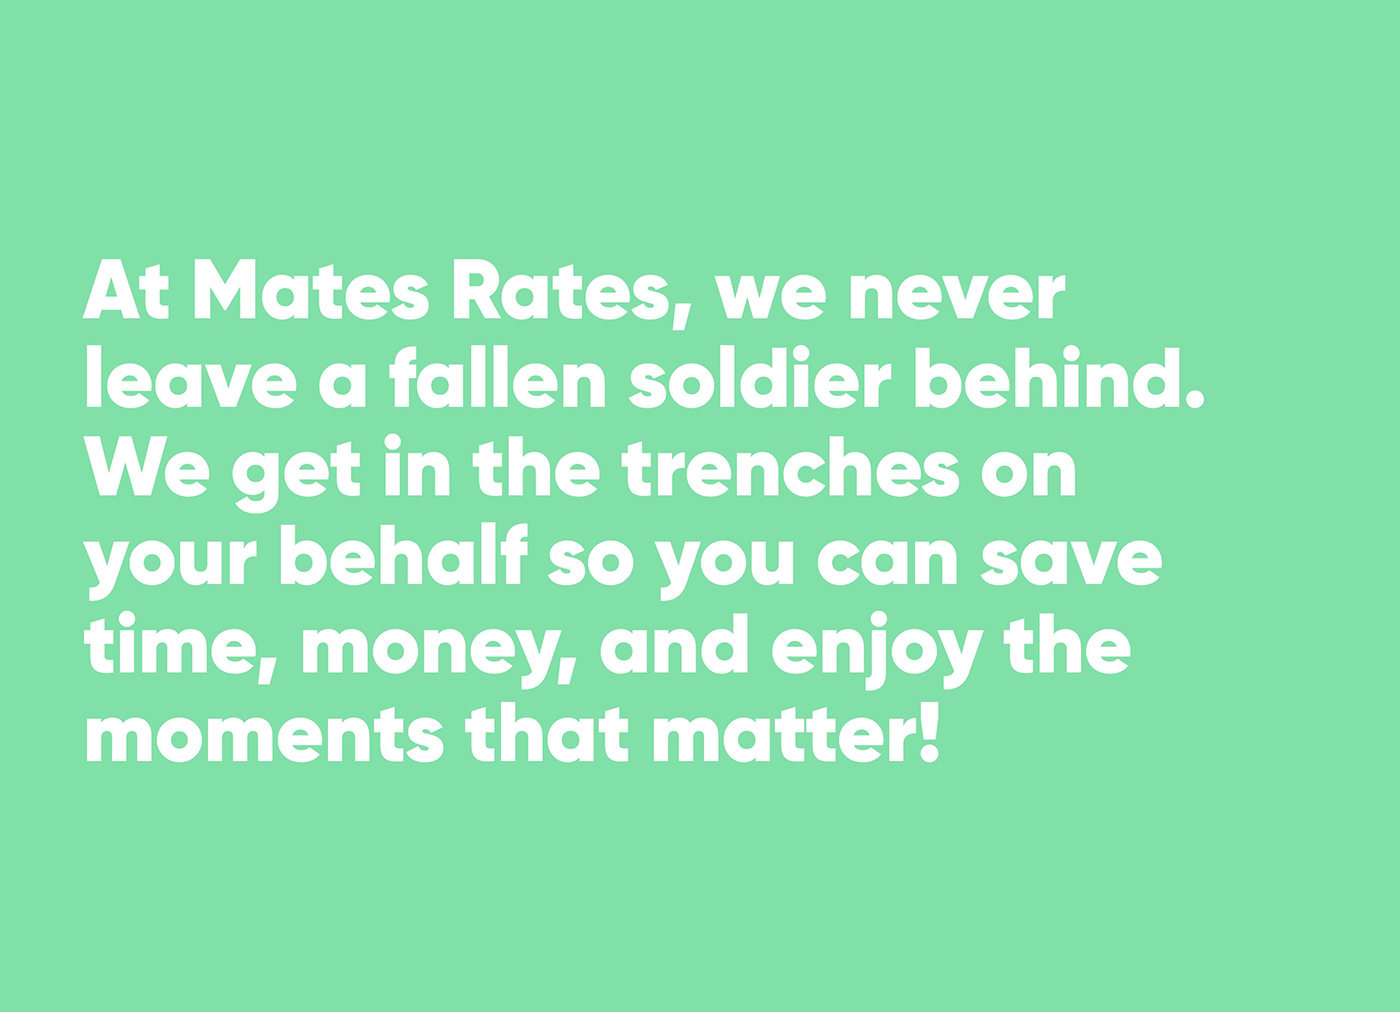 mates rates mortgage brokers review